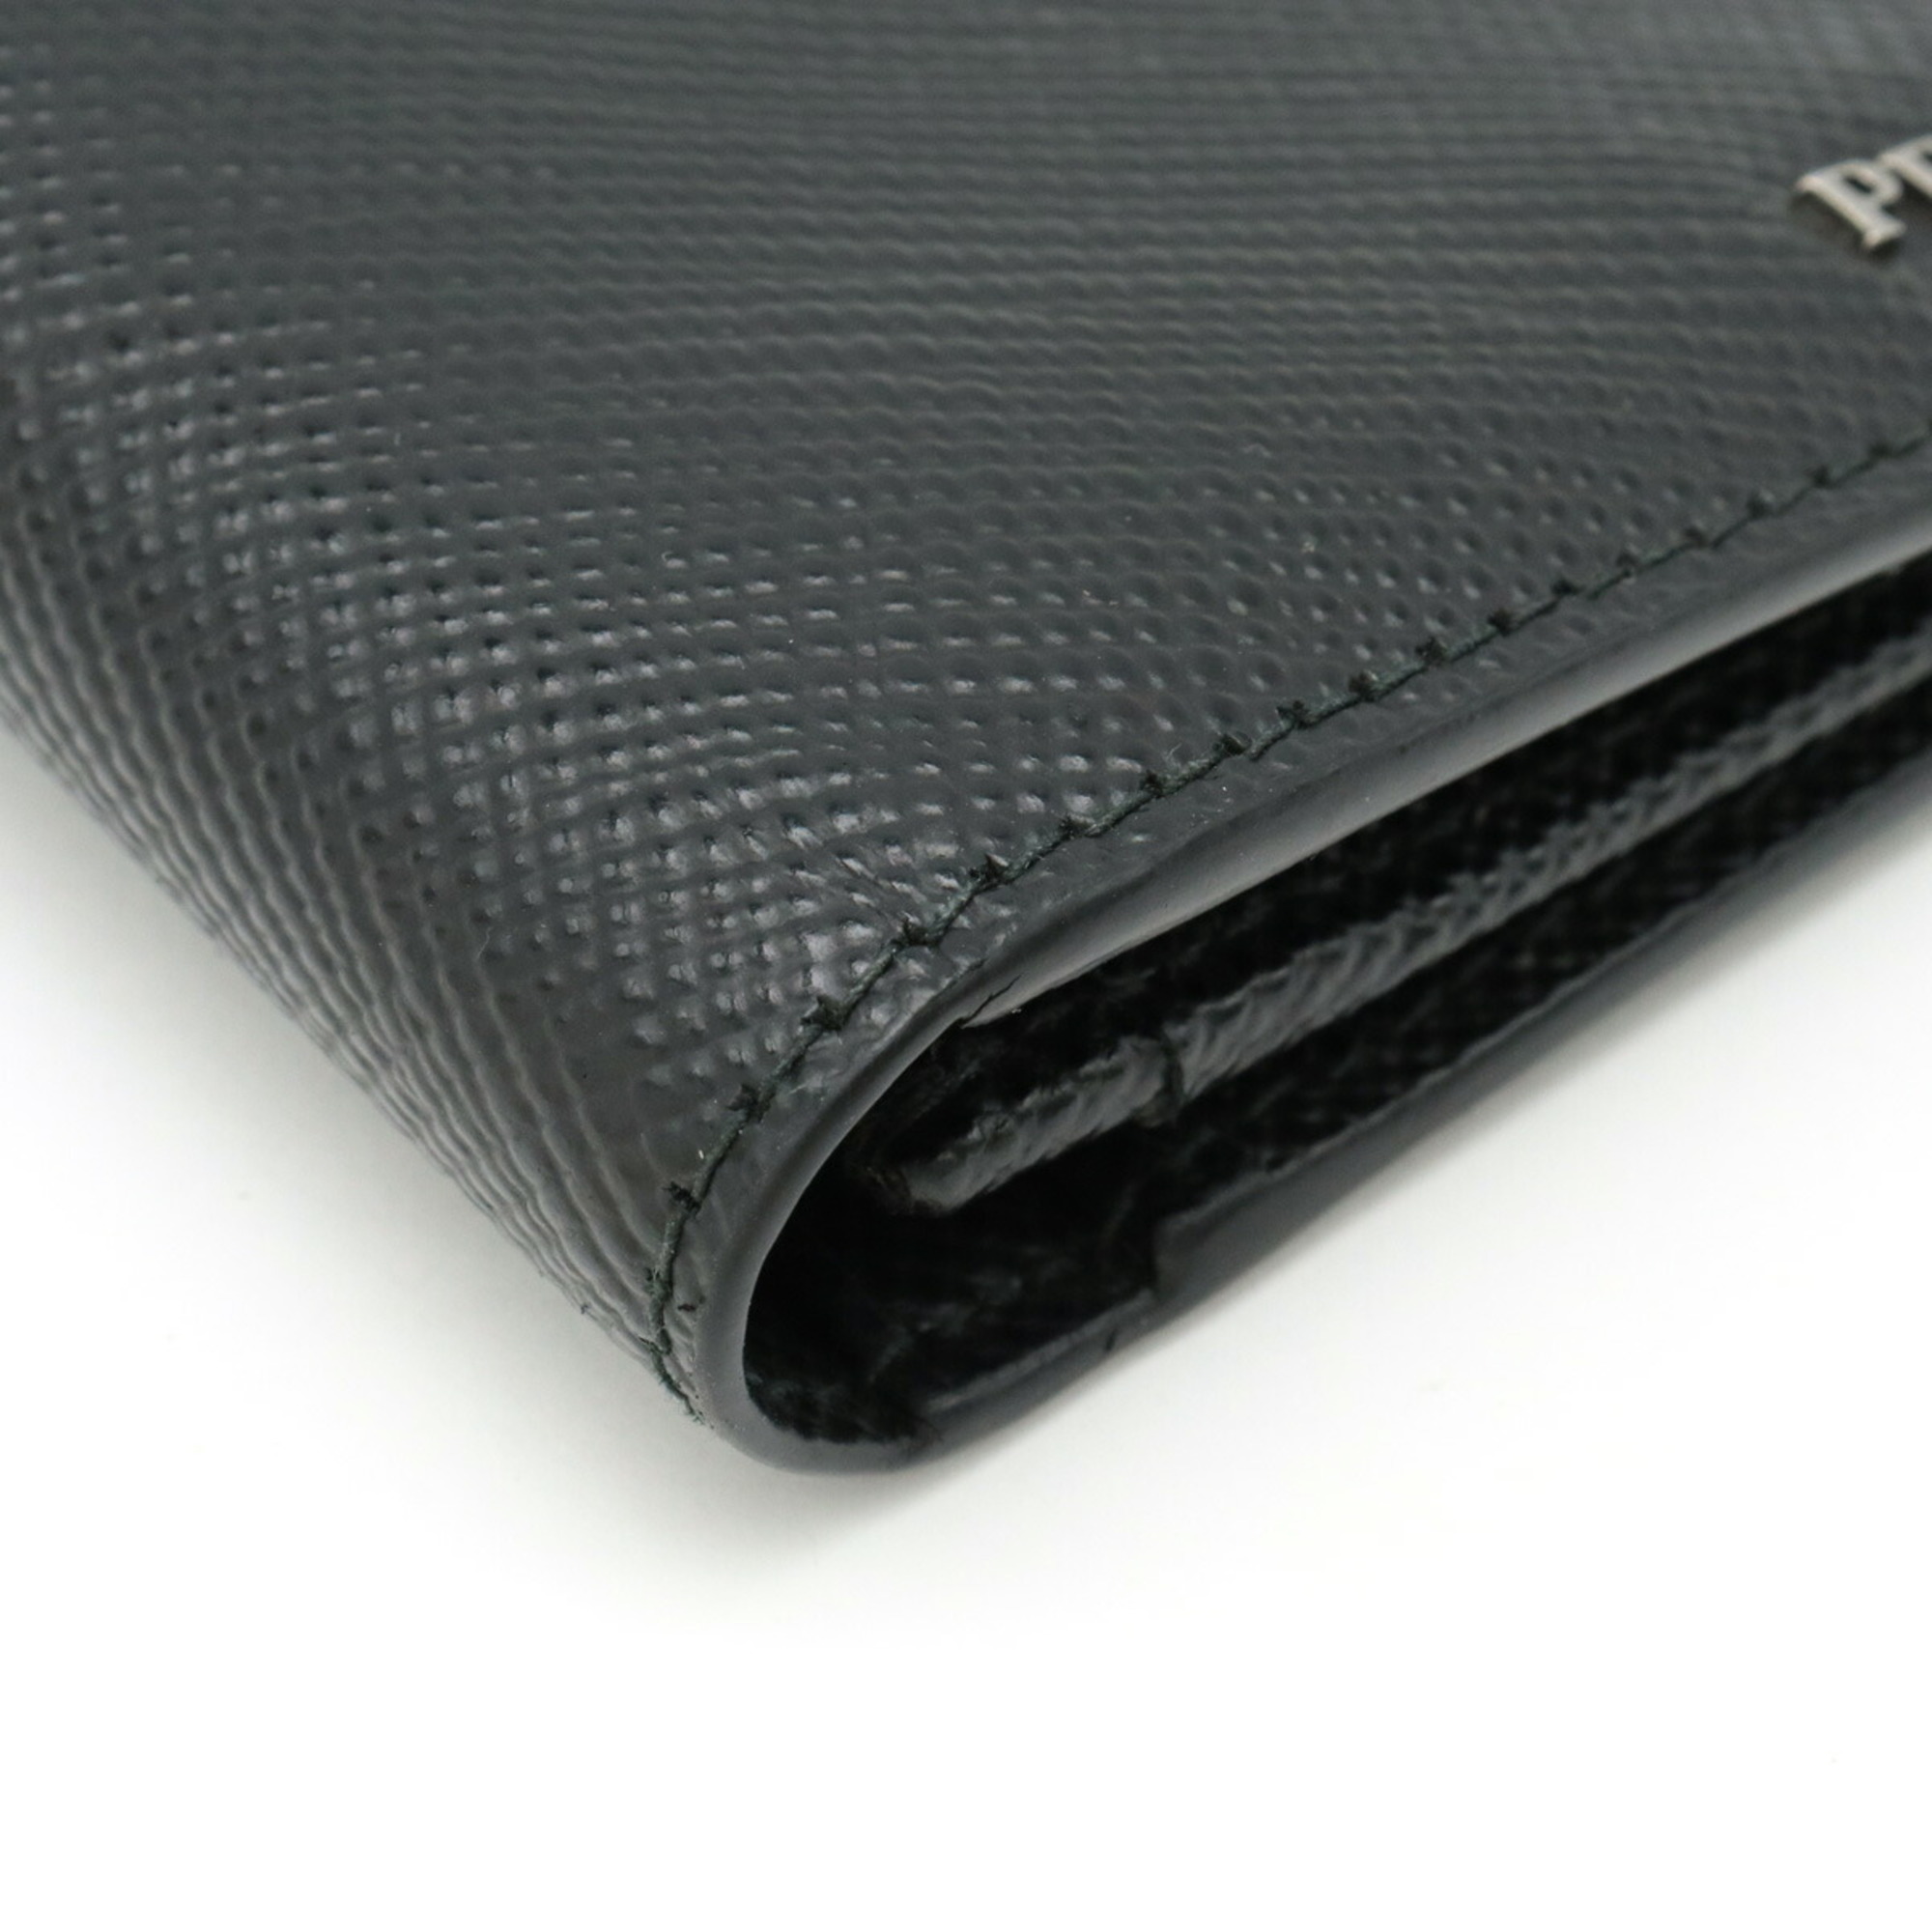 PRADA SAFFIANO CUIR C Bifold Long Wallet Saffiano Leather NERO Black Boutique Purchased Item 2MV836